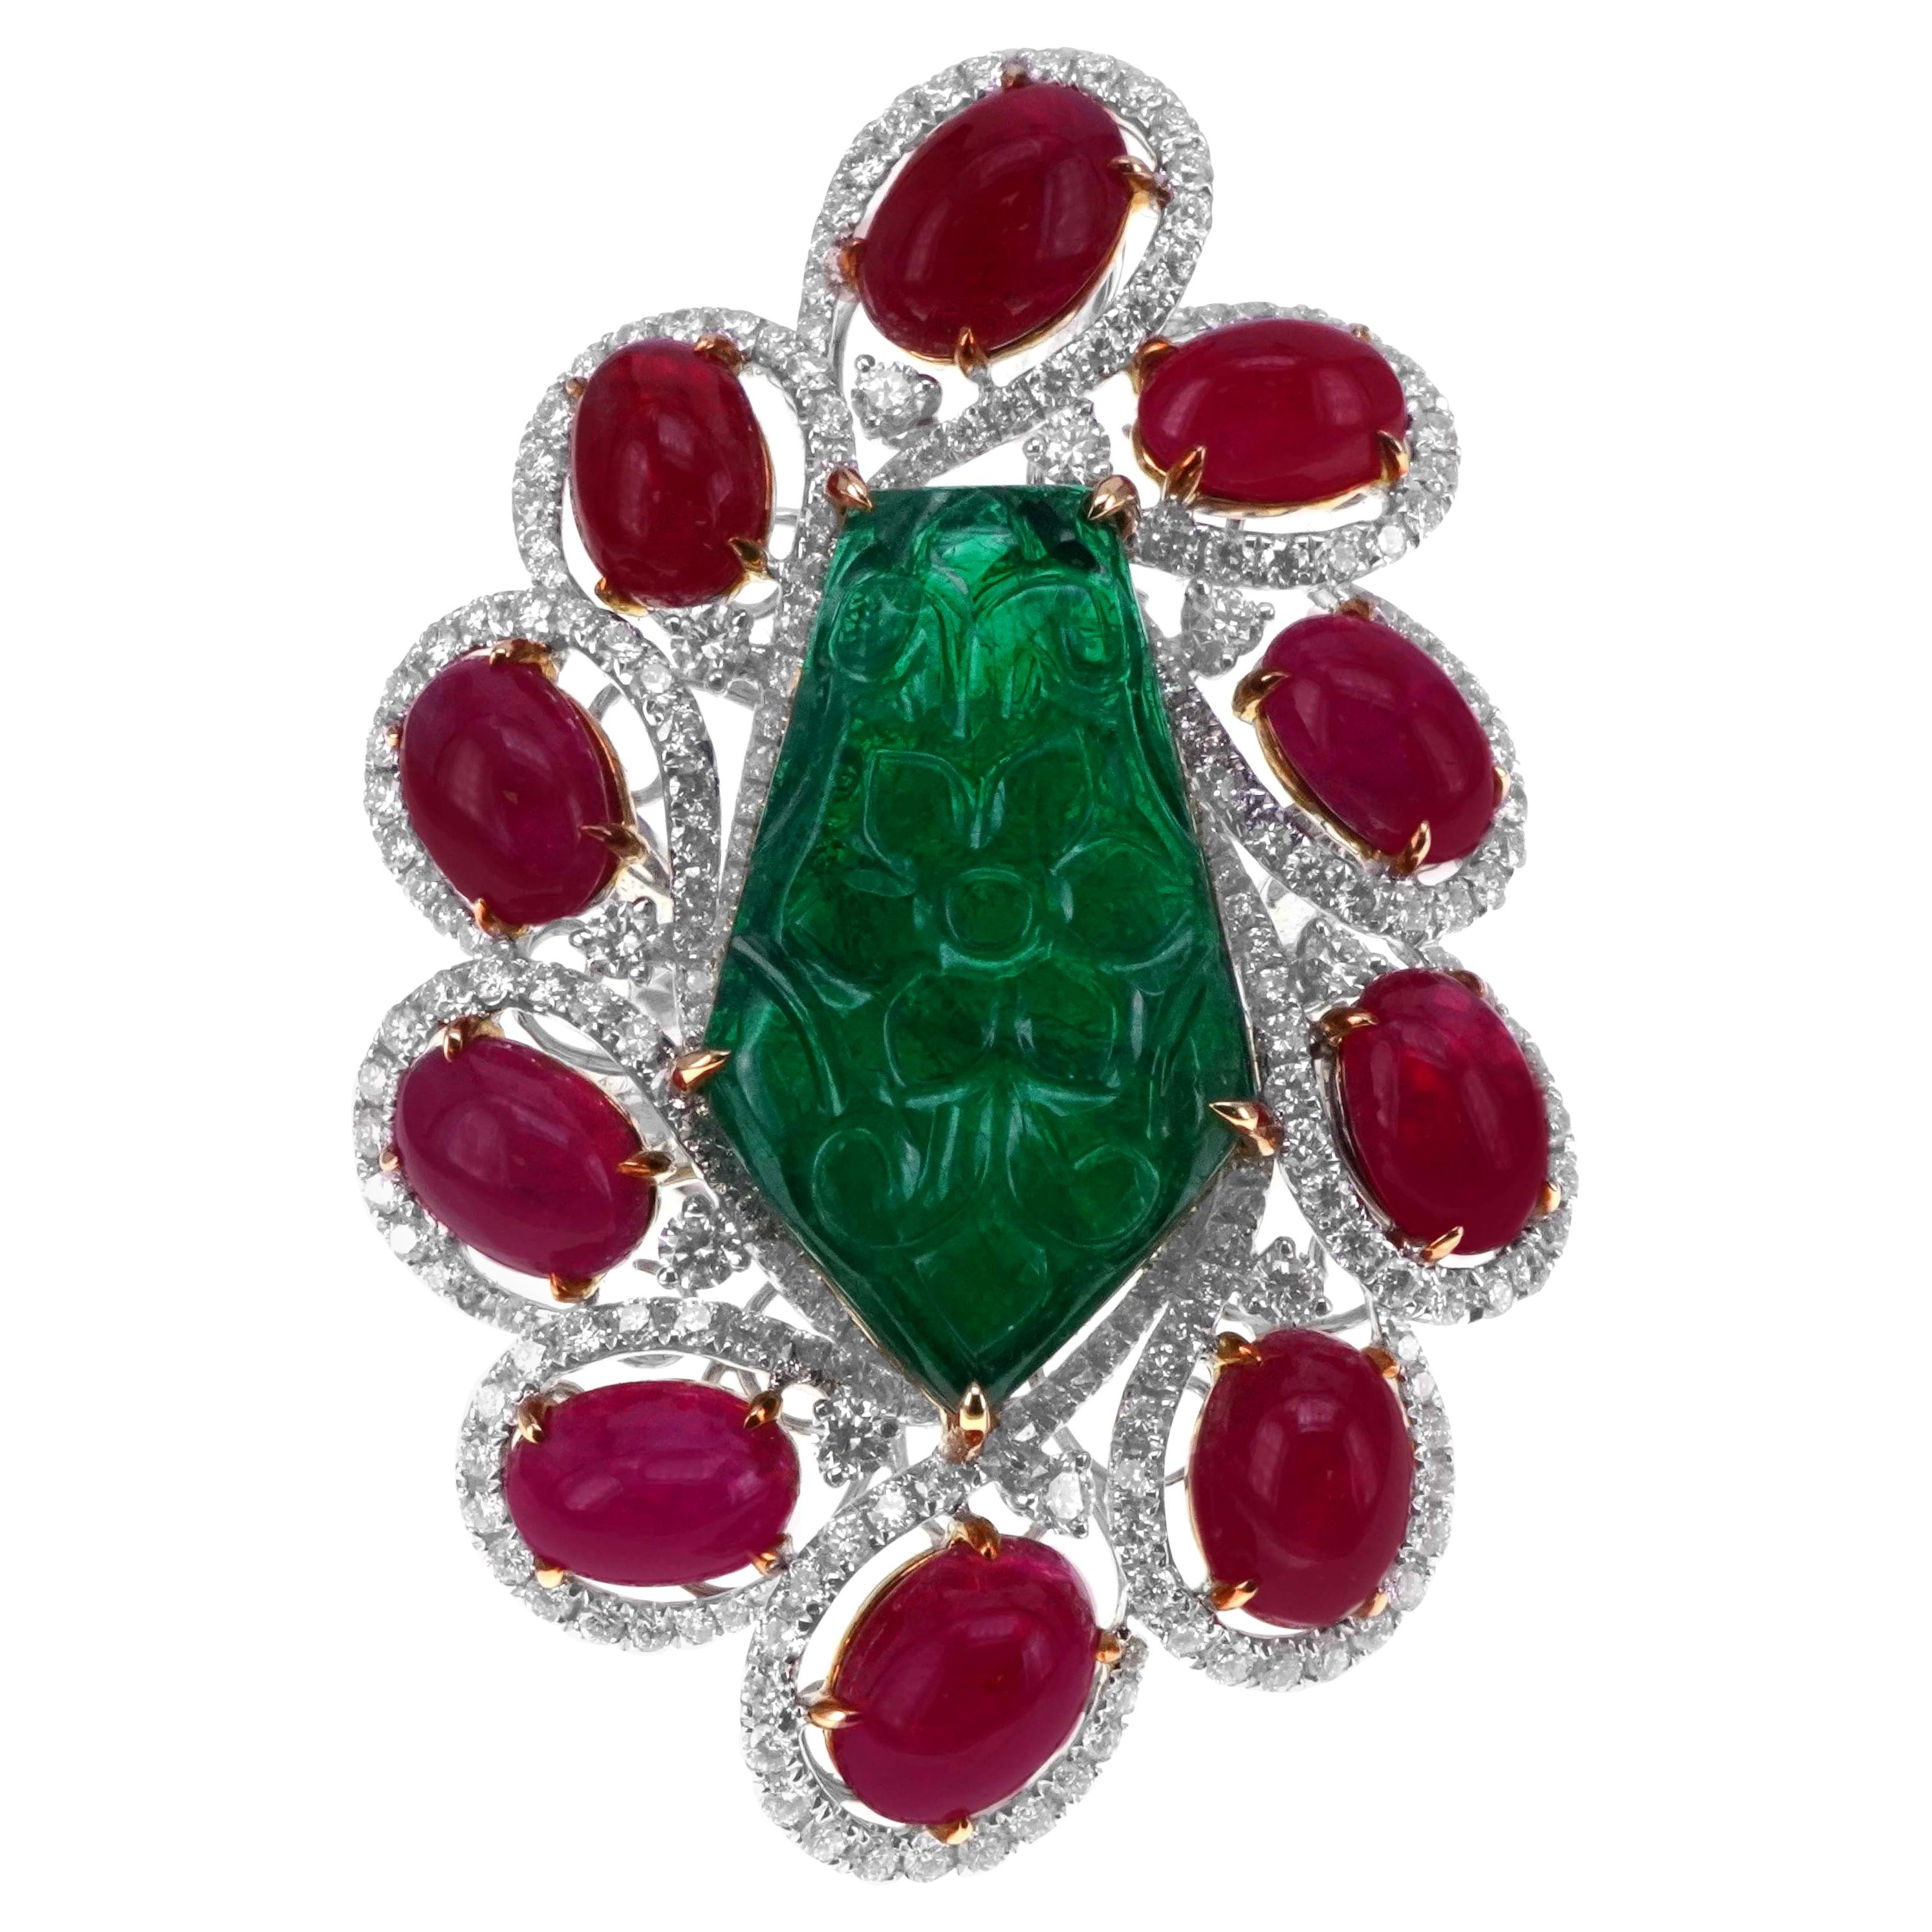 11 Carat Mughal Cut Vivid Green Emerald & 16 Carat Vivid Red Ruby 18k Old Ring For Sale